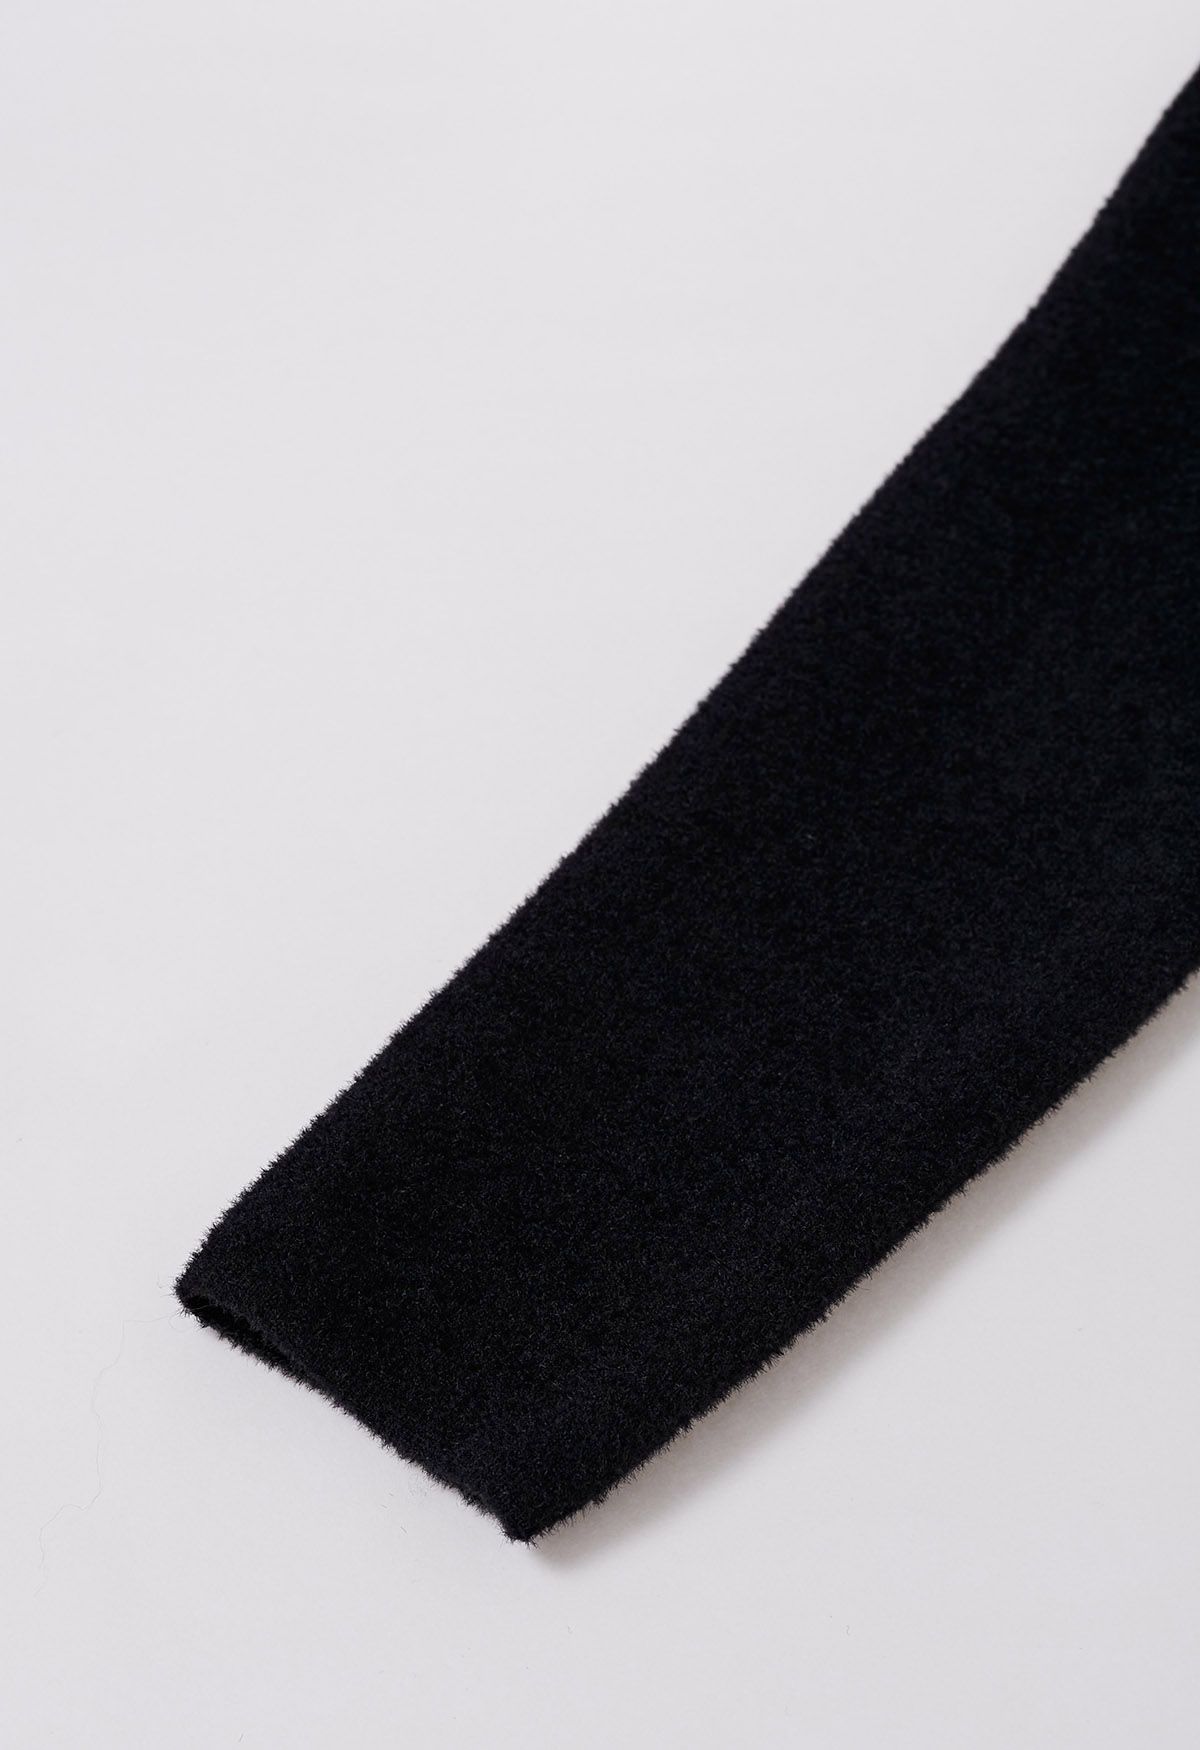 Scallop Edge Heart-Shape Button Knit Cardigan in Black